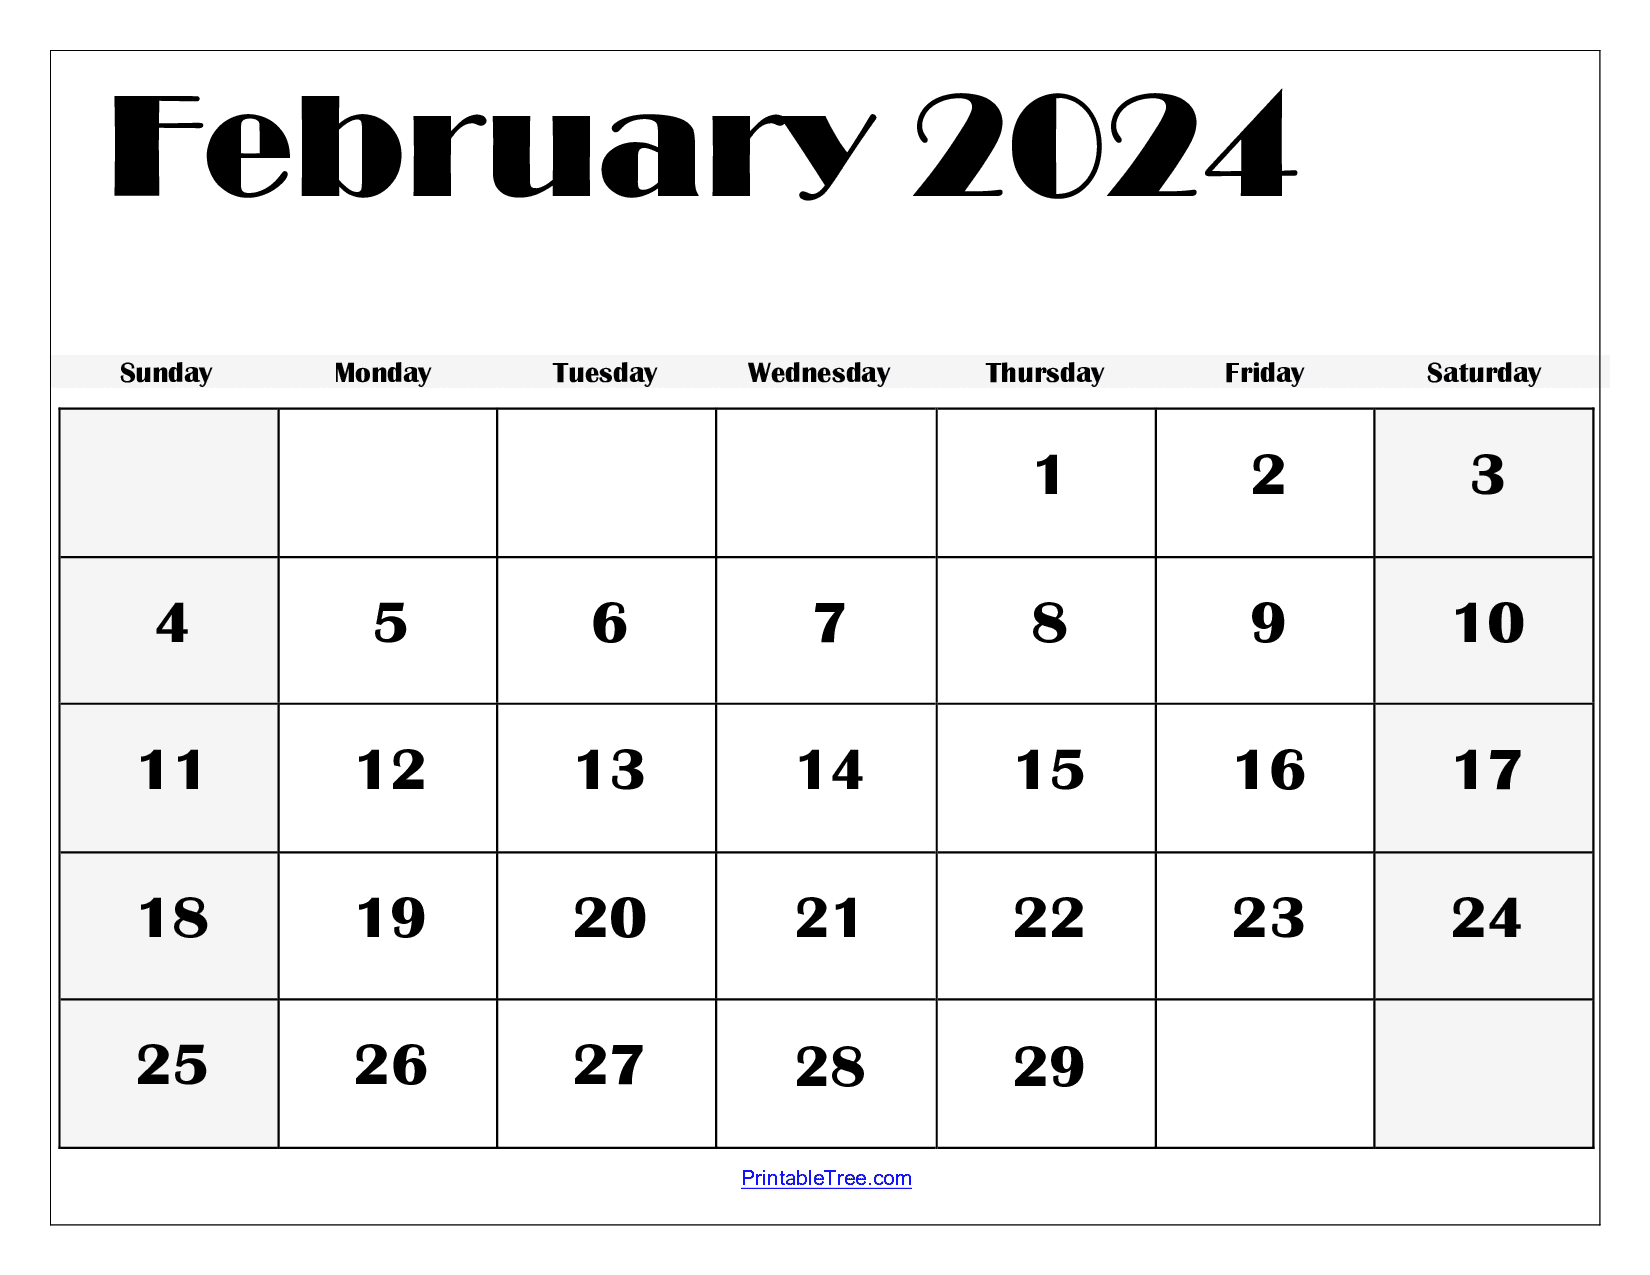 February 2024 Calendar Printable Pdf Template With Holidays for Calendar Printable 2024 February